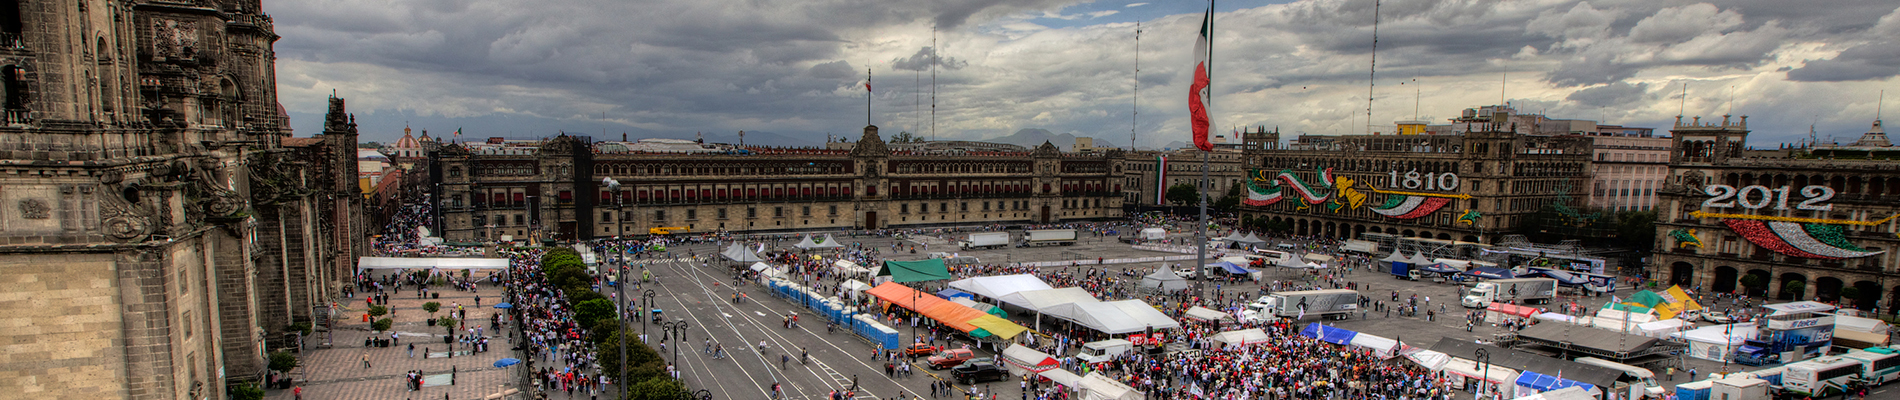 Historic City Center of Mexico City